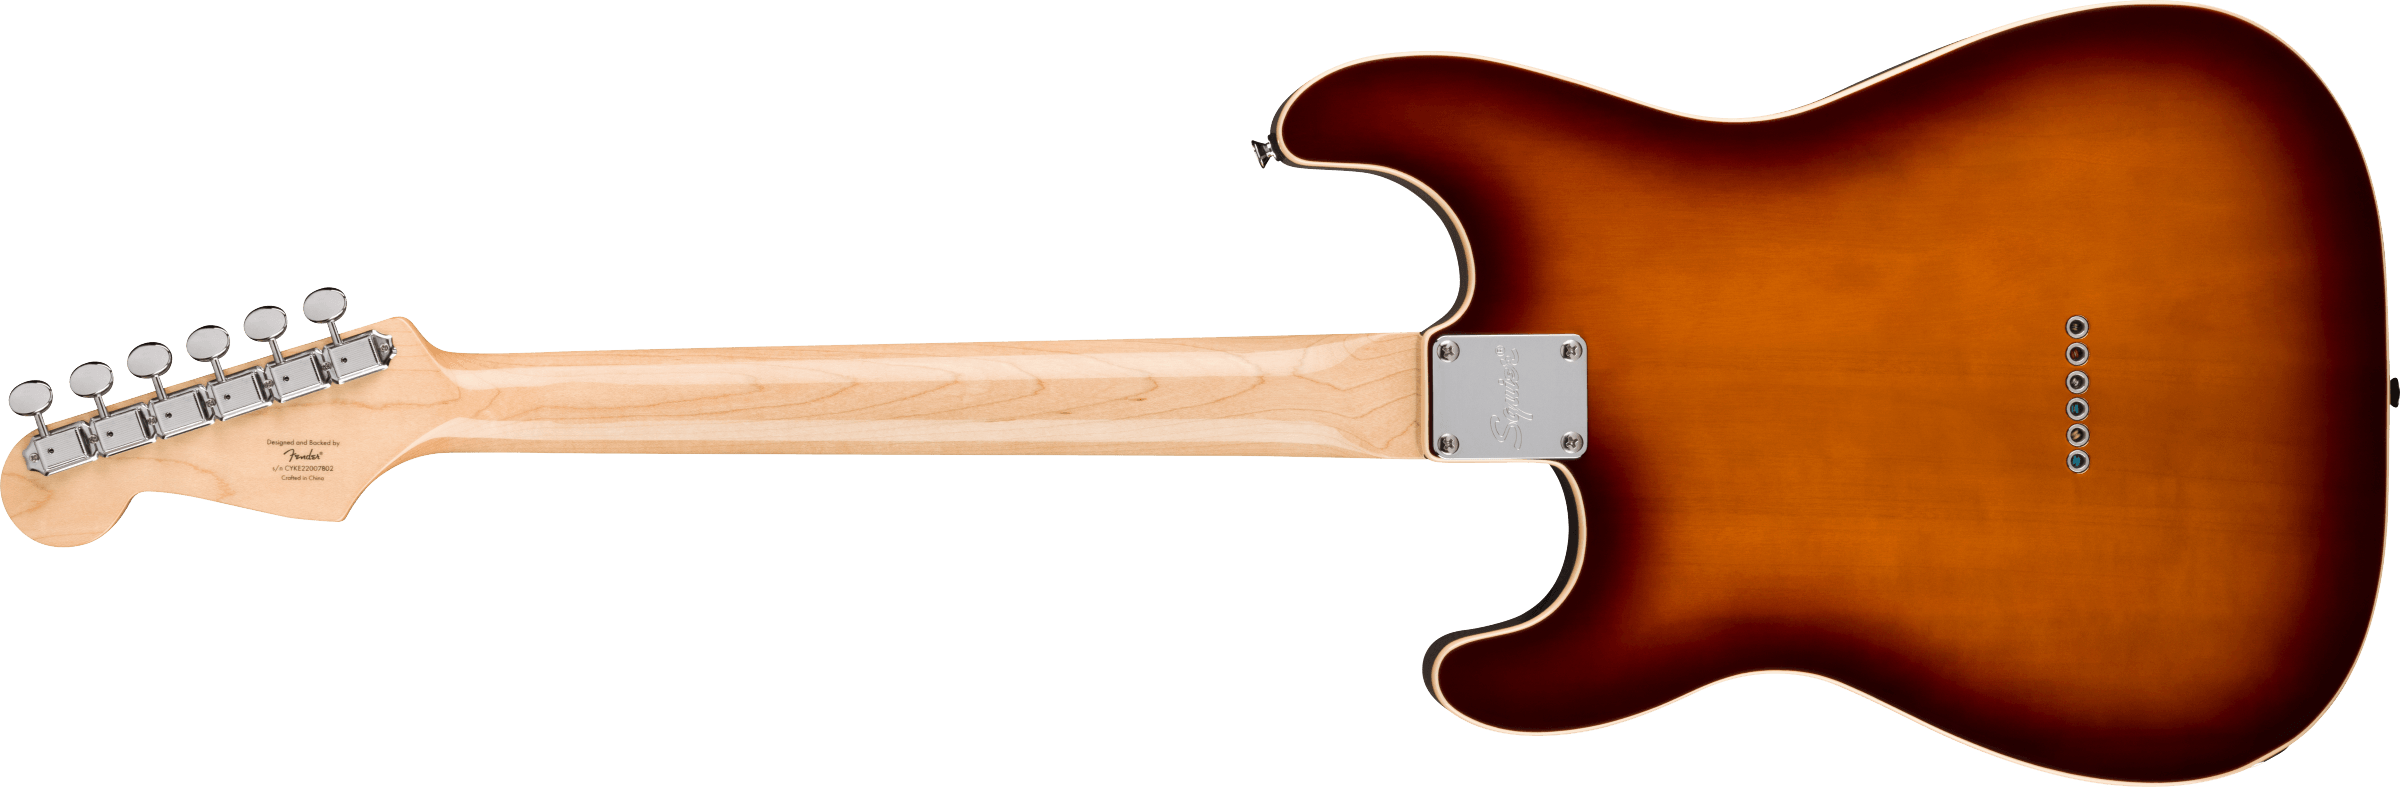 Squier Strat Custom Nashville Paranormal Series 3s Ht Lau - 2-color Sunburst - Guitarra eléctrica con forma de str. - Variation 2